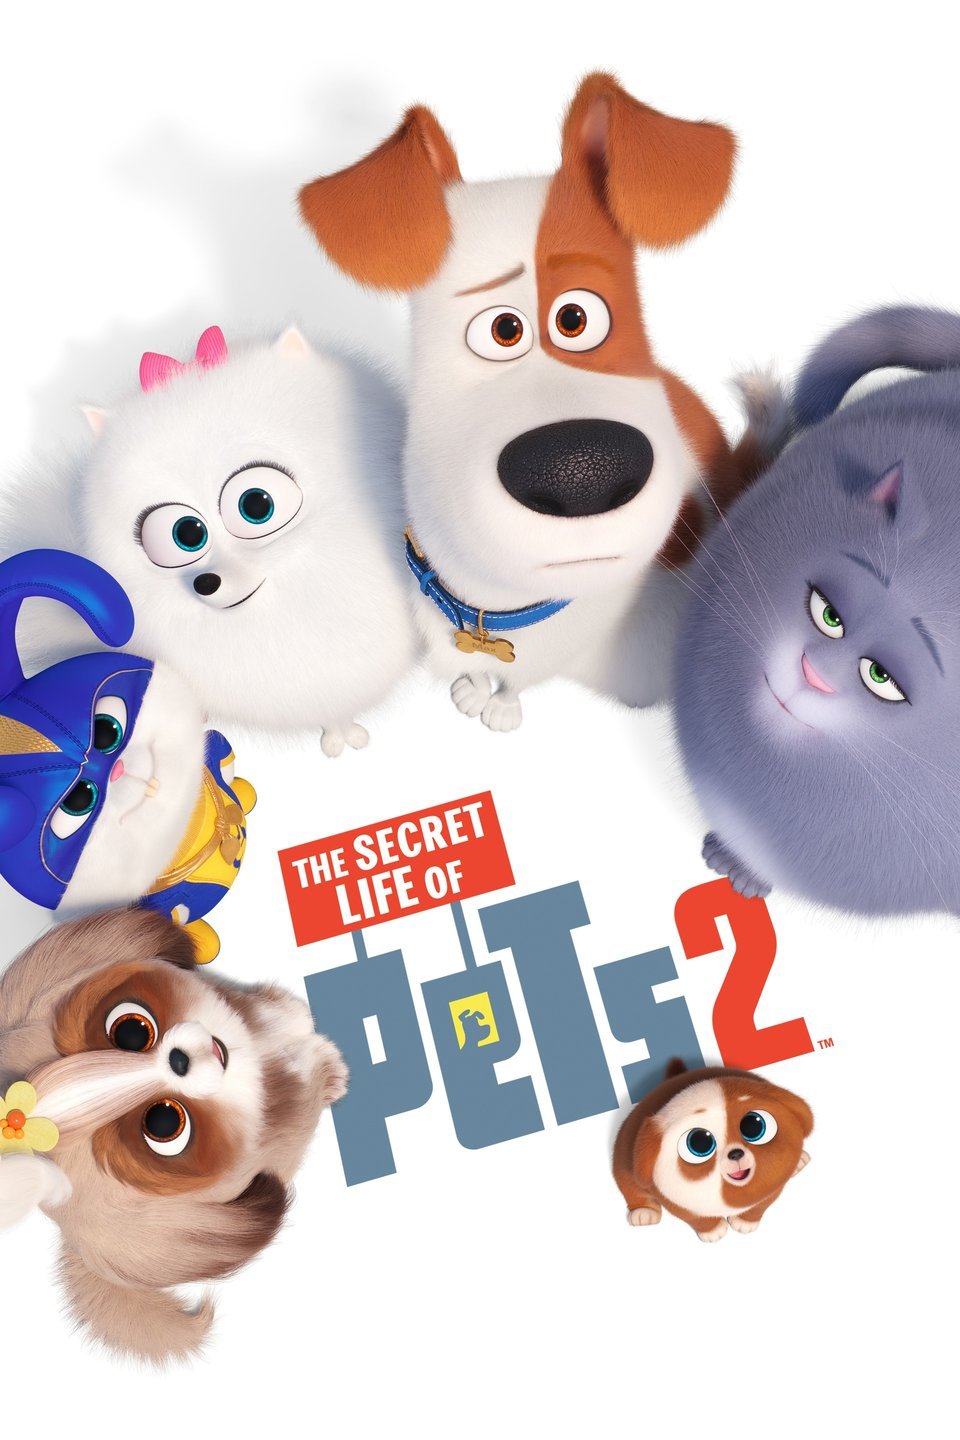 [MINI Super-HQ] Secret Life of Pets 2 (2019) เรื่องลับแก๊งขนฟู ภาค 2 [1080p] [พากย์ไทย 5.1 + เสียงอังกฤษ DTS] [บรรยายไทย + อังกฤษ] [เสียงไทย + ซับไทย] [OPENLOAD]